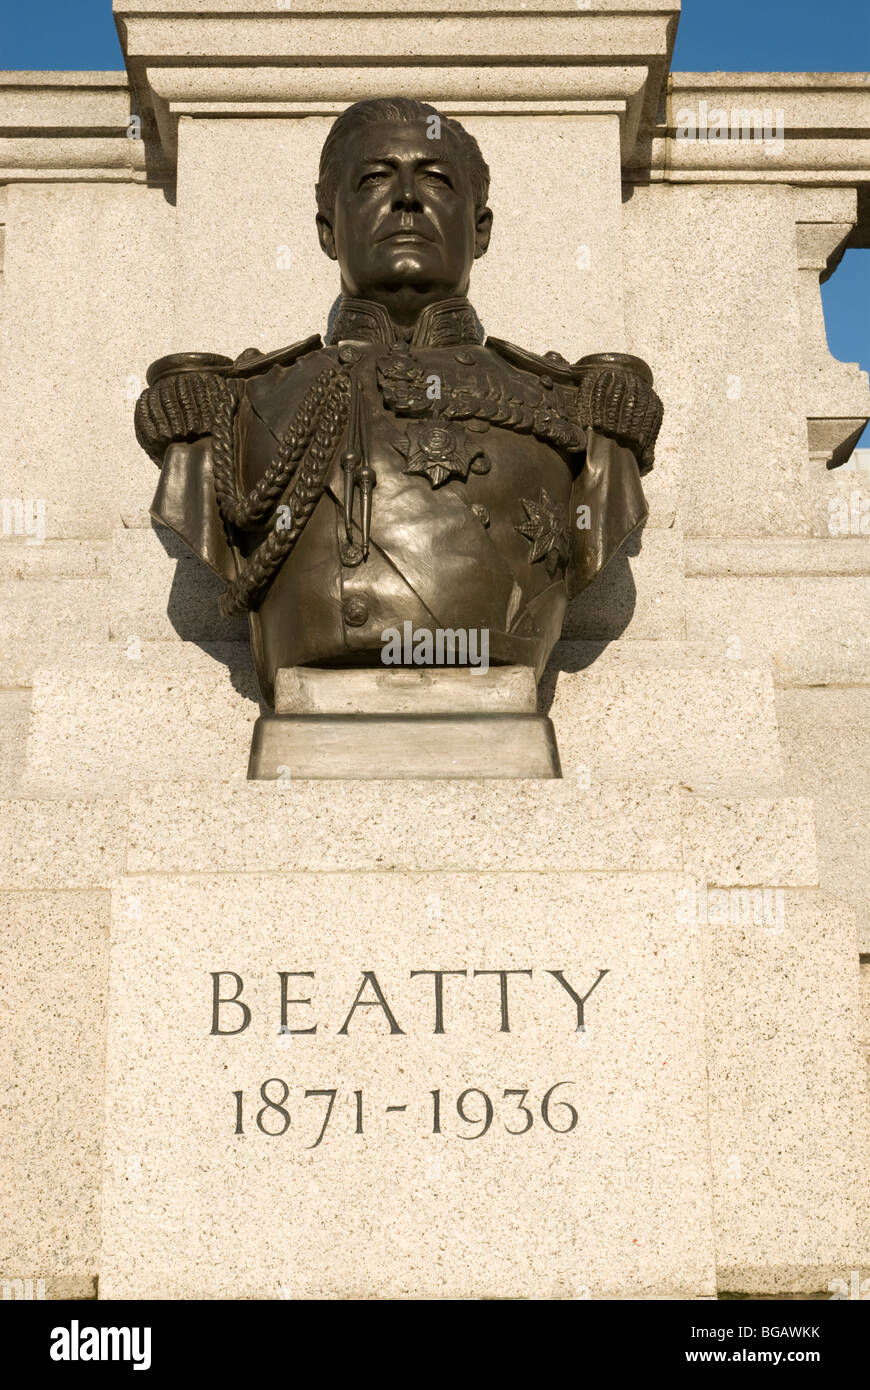 Bronze bust of Admiral David Beatty 1871-1936 Trafalgar Square London UK Stock Photo